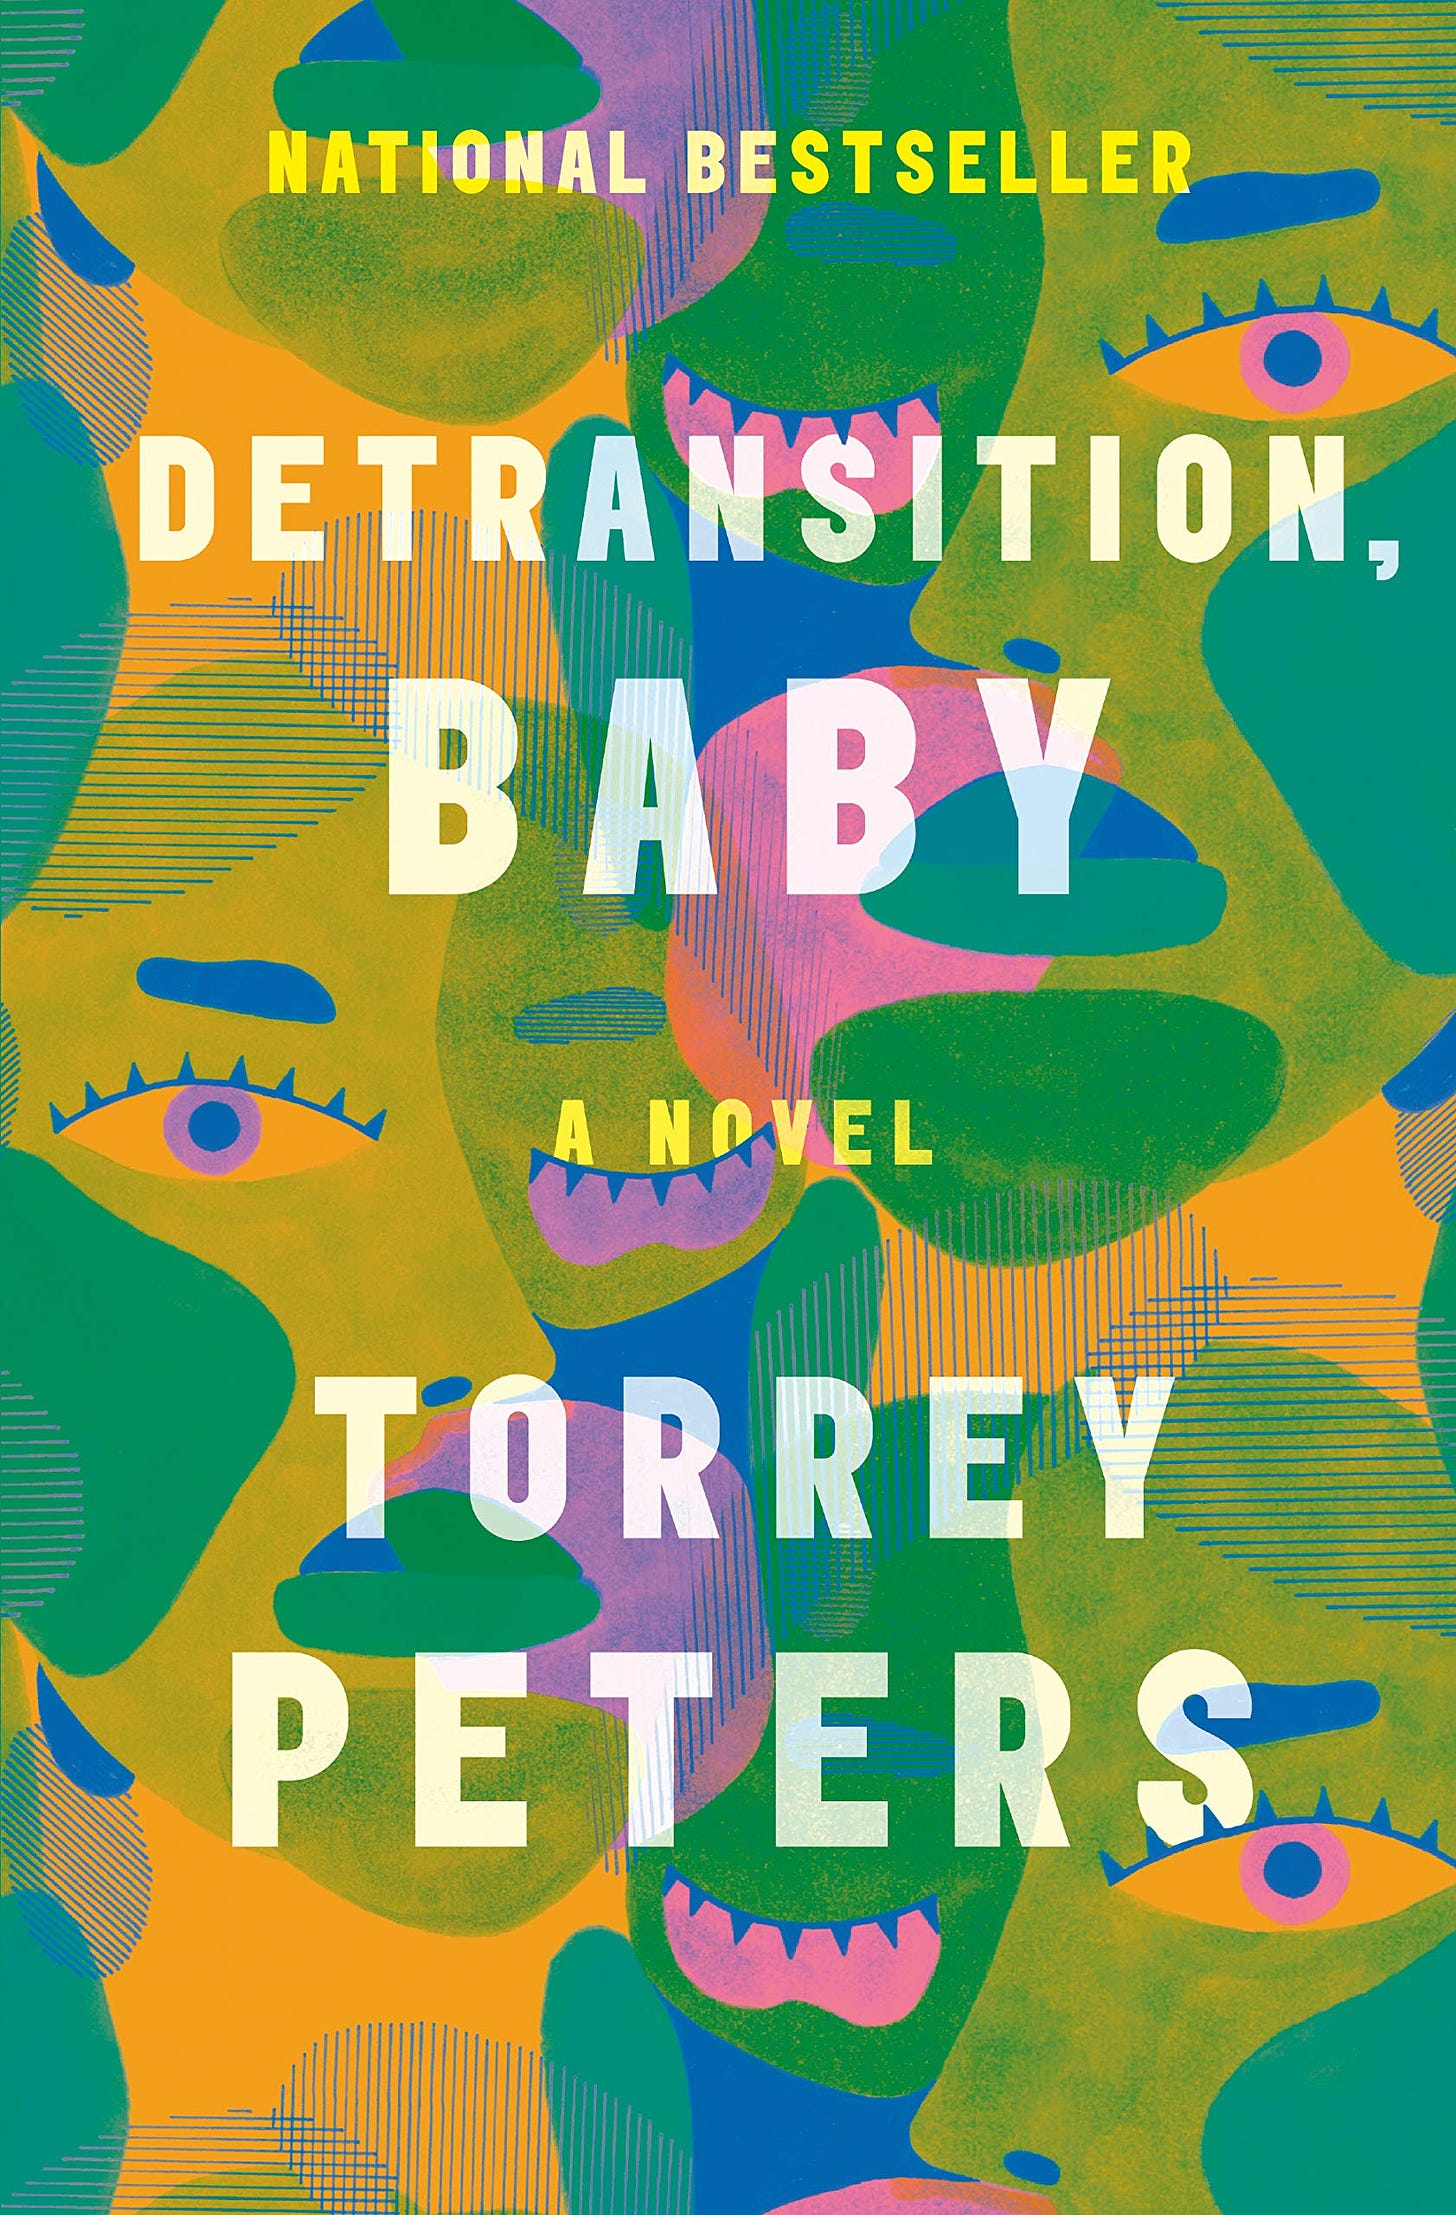 Amazon.com: Detransition, Baby: A Novel (9780593133378): Peters, Torrey:  Books